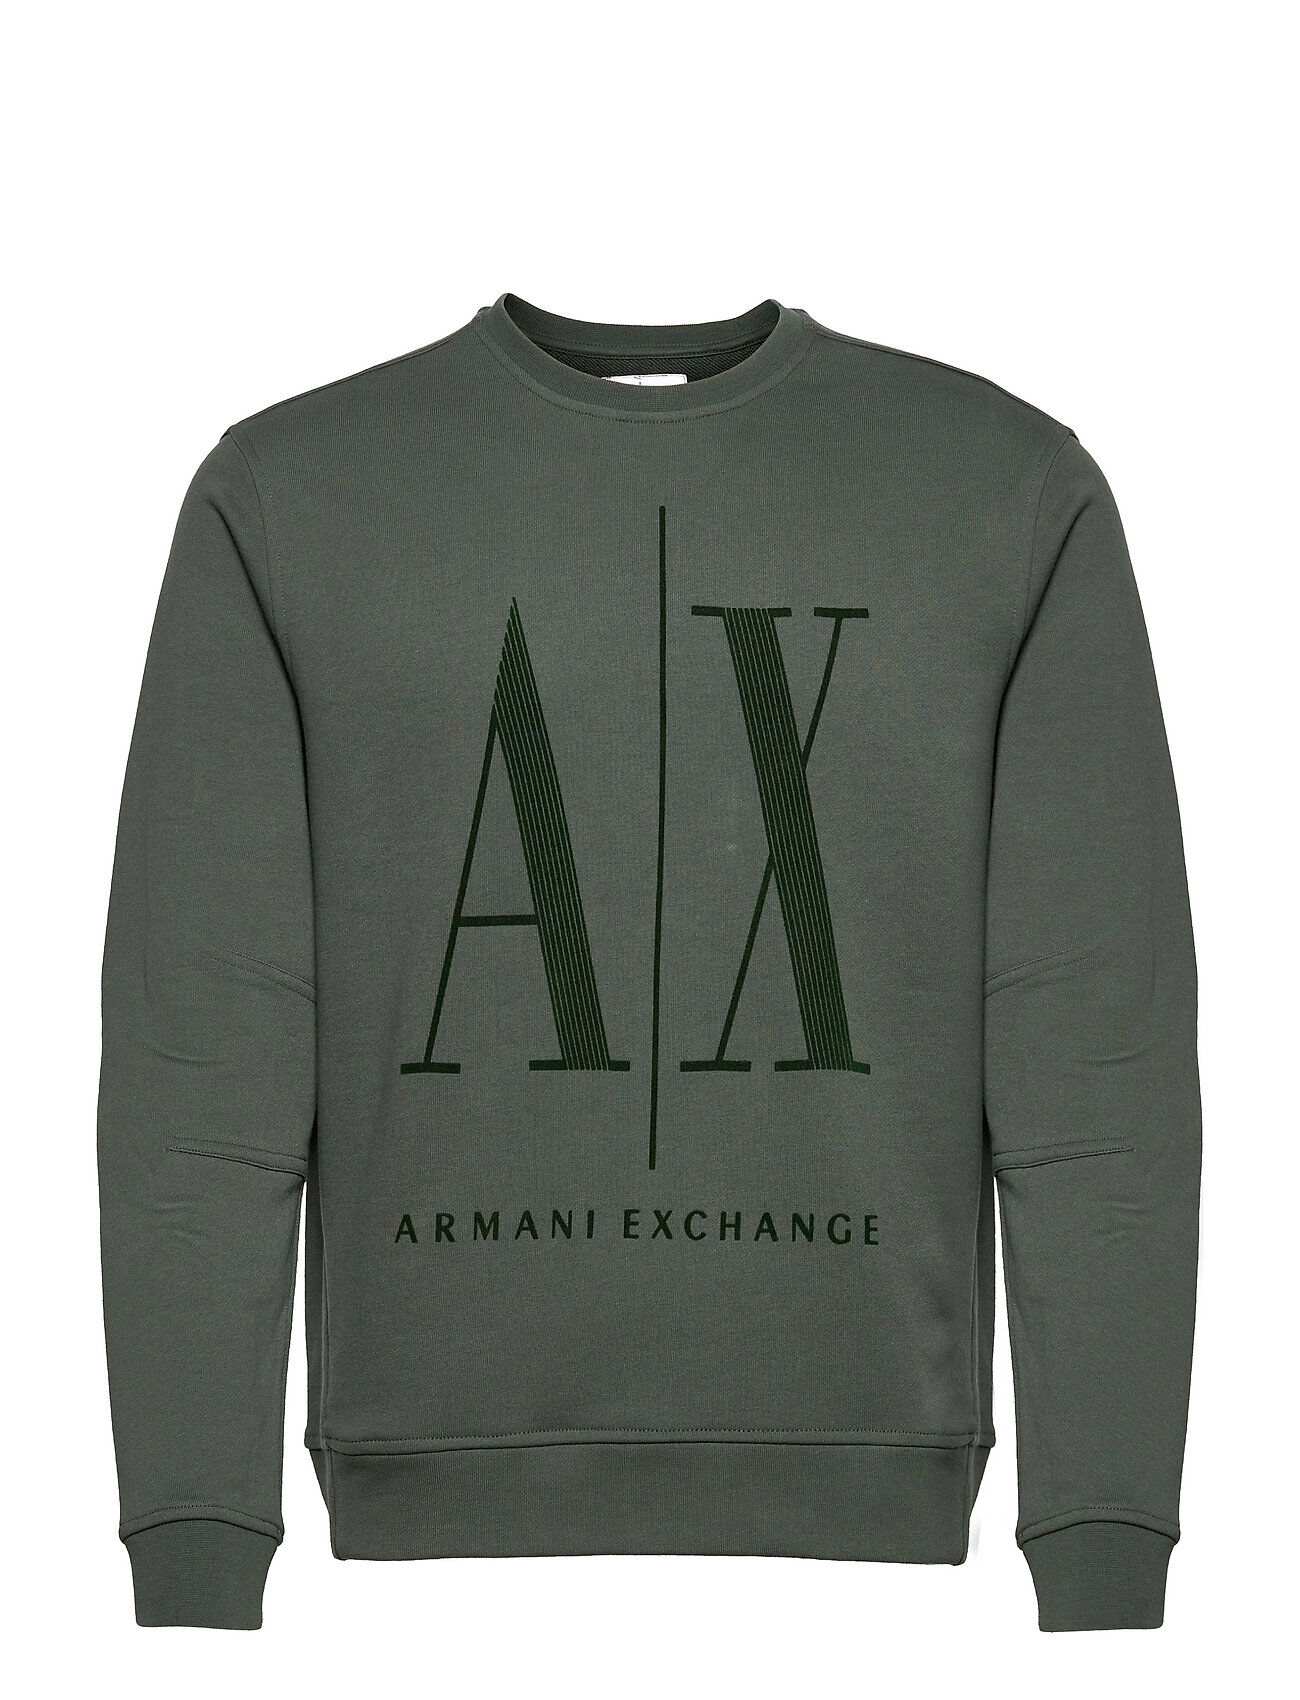 Giorgio Armani Sweatshirt Sweat-shirt Genser Grønn Armani Exchange